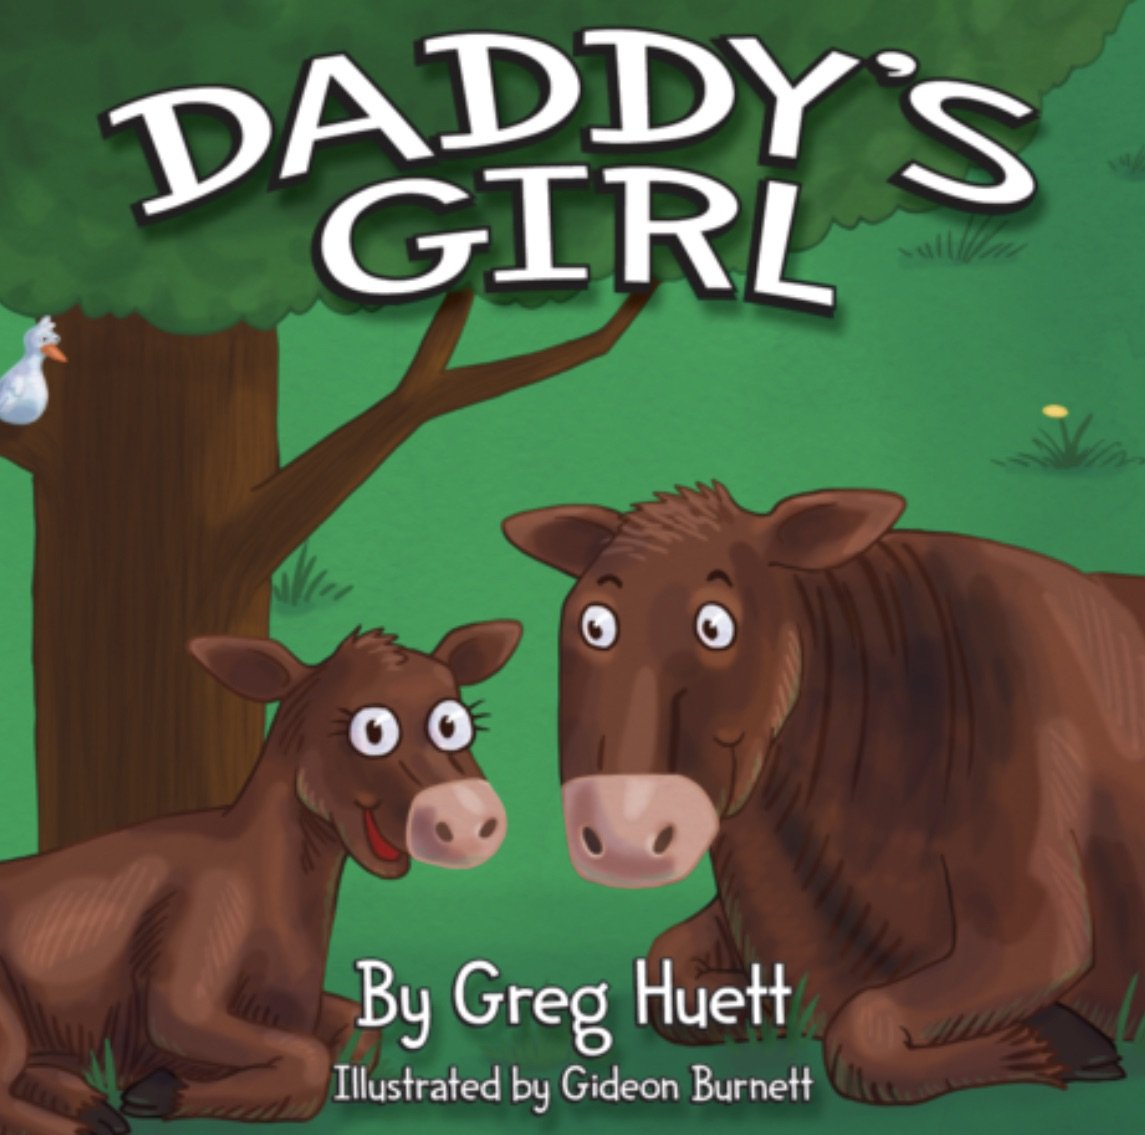 DADDY'S GIRL KIDS BOOK